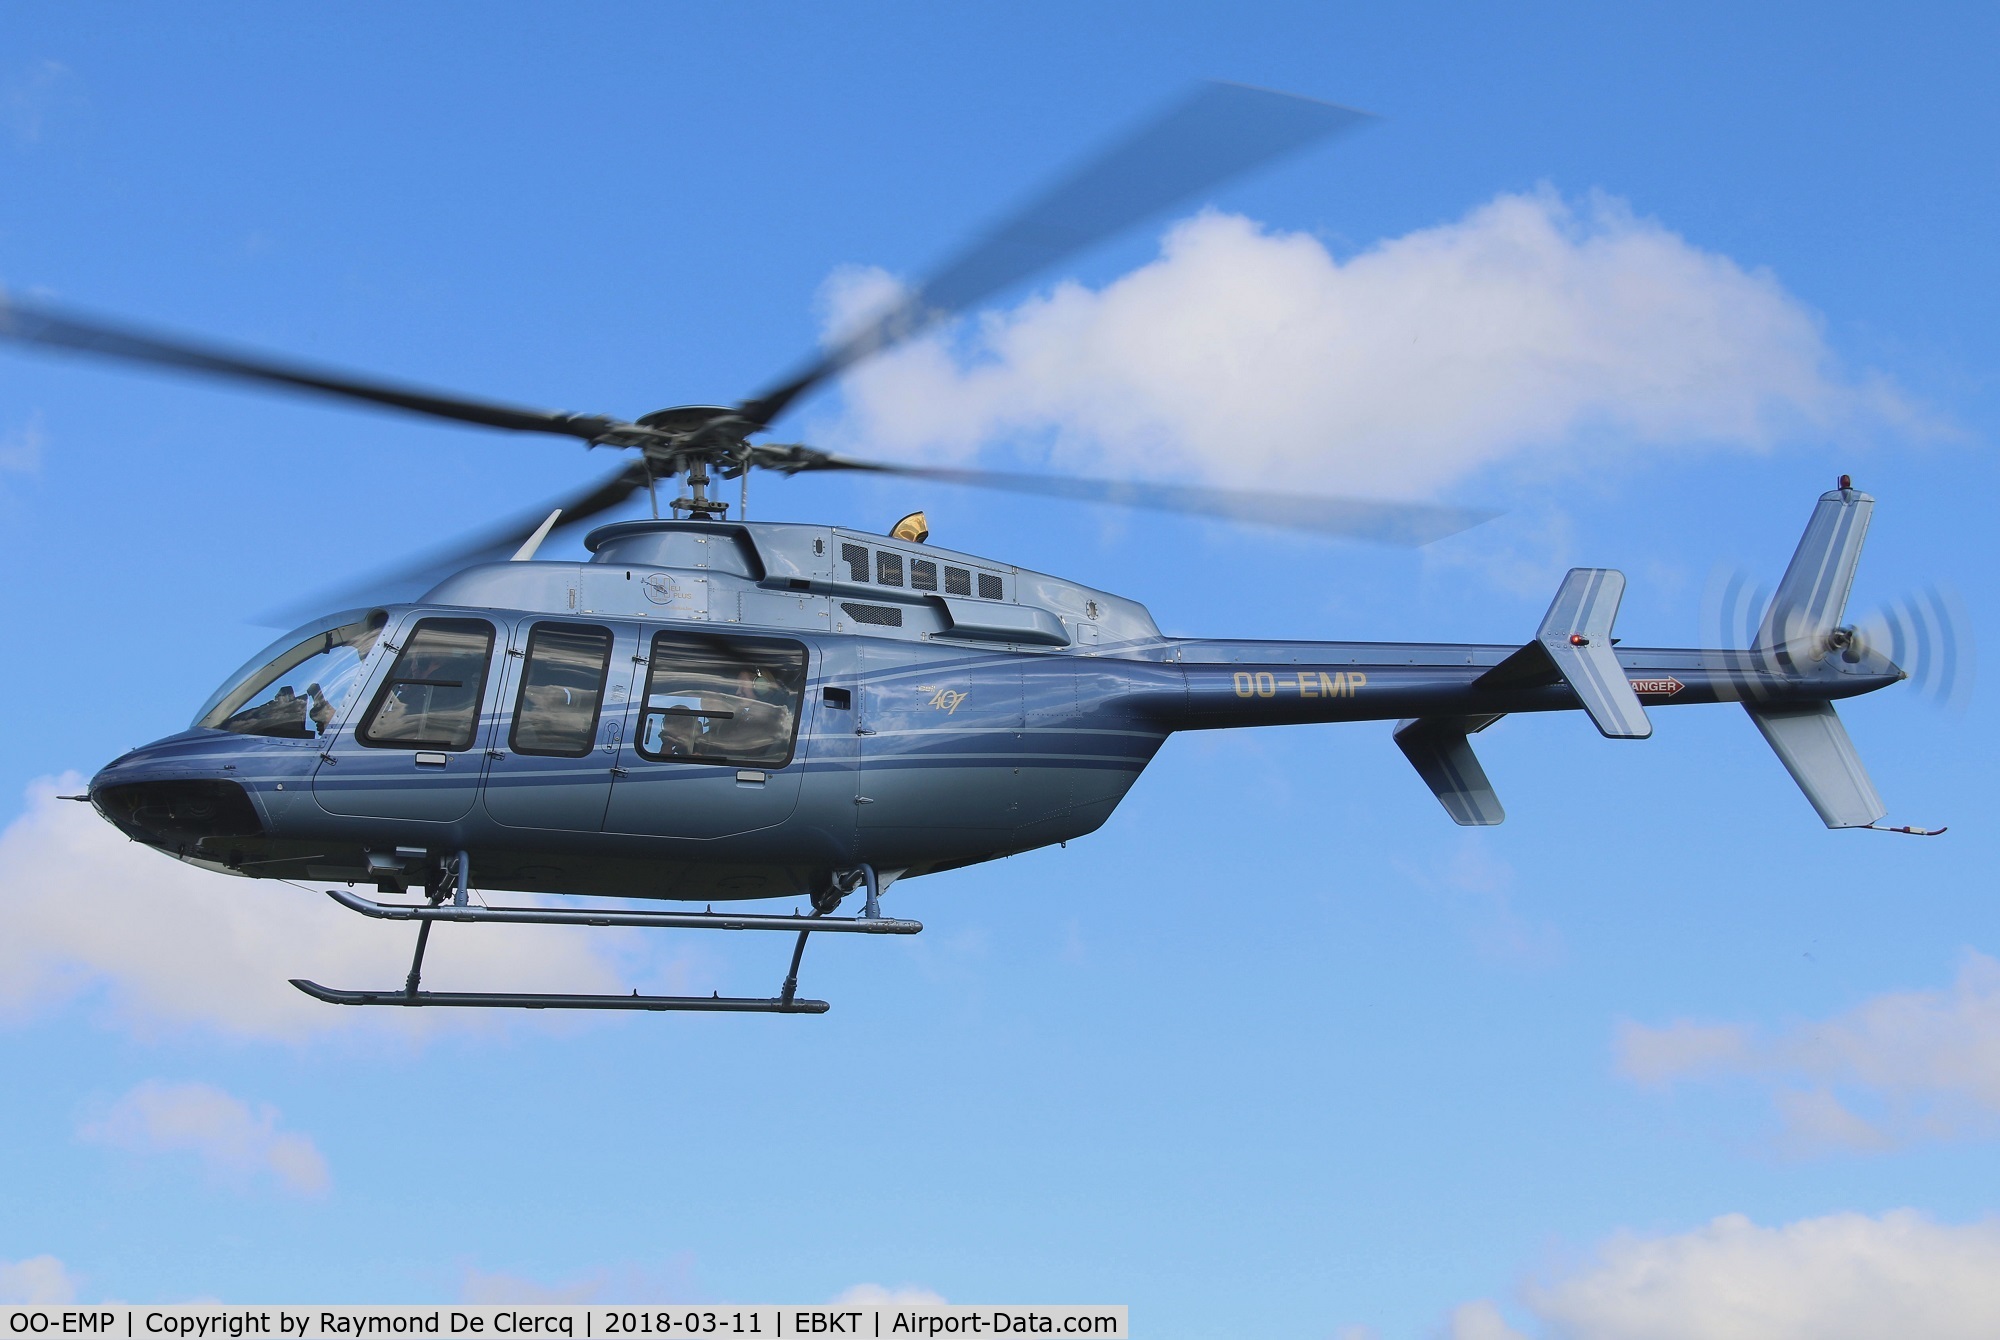 OO-EMP, 2005 Bell 407 C/N 53668, Landing at Wevelgem.